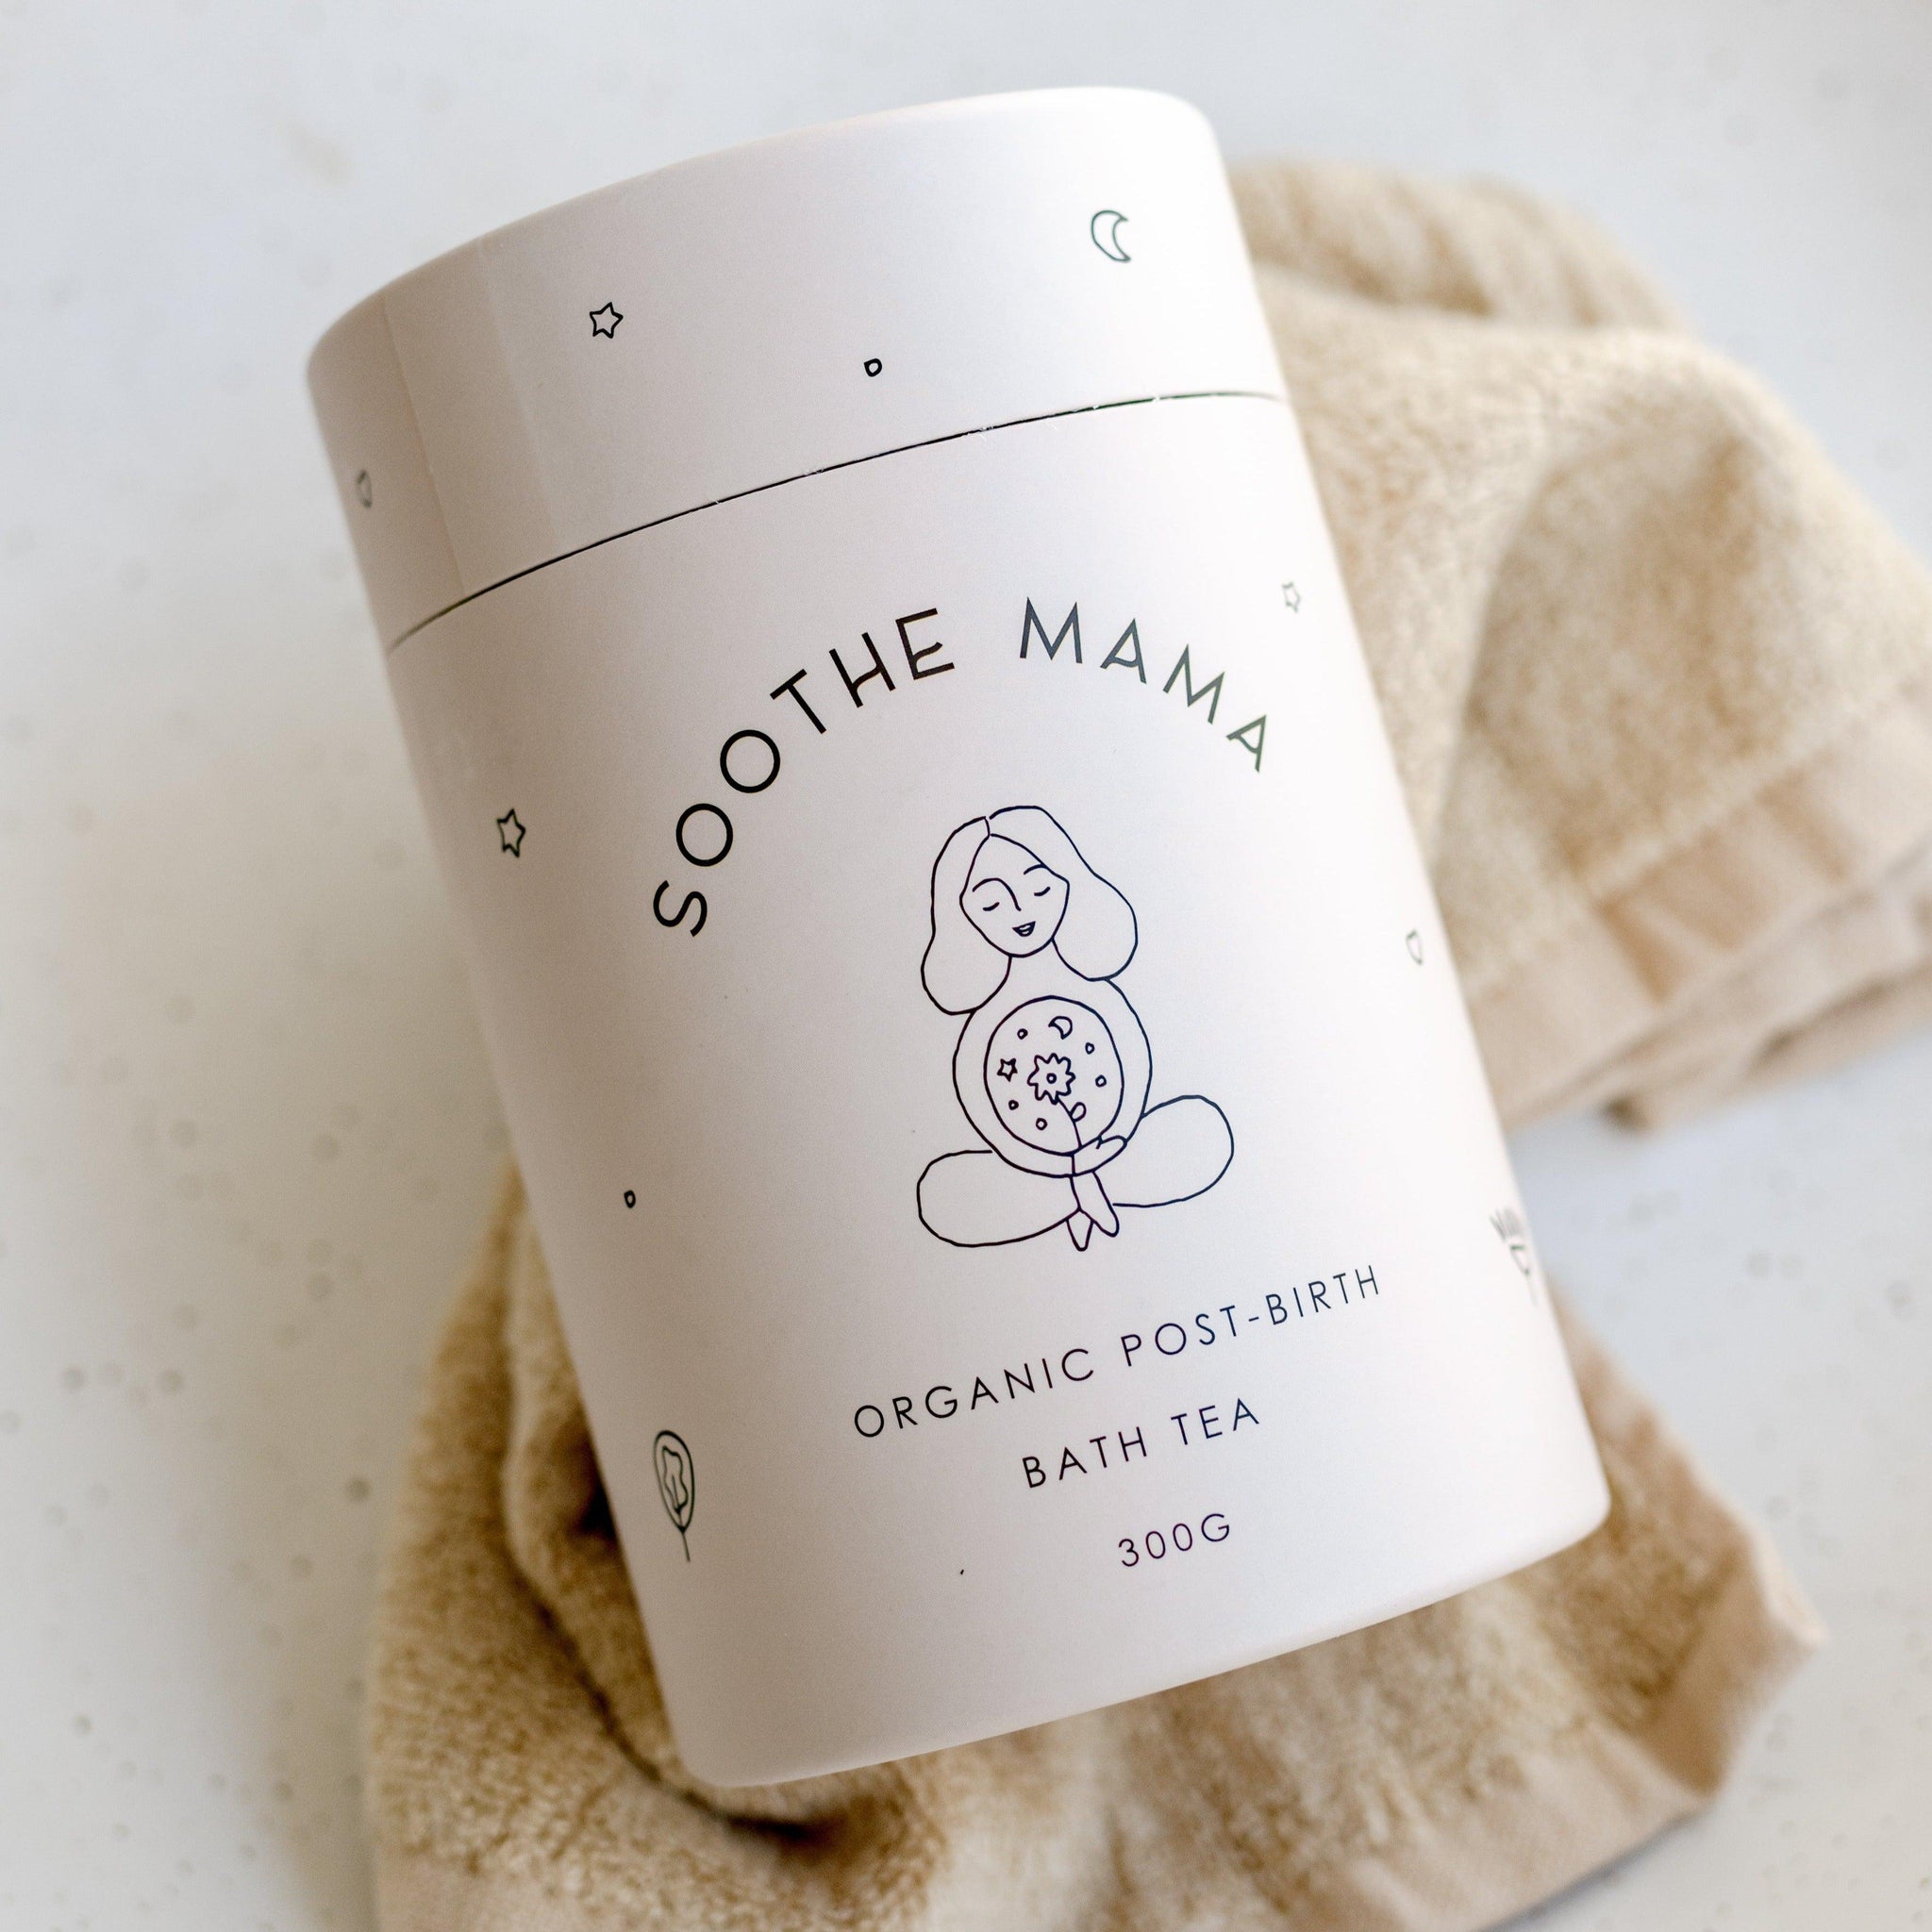 Seasons of Mama Soothe Mama Organic Post-Birth Bath Tea.